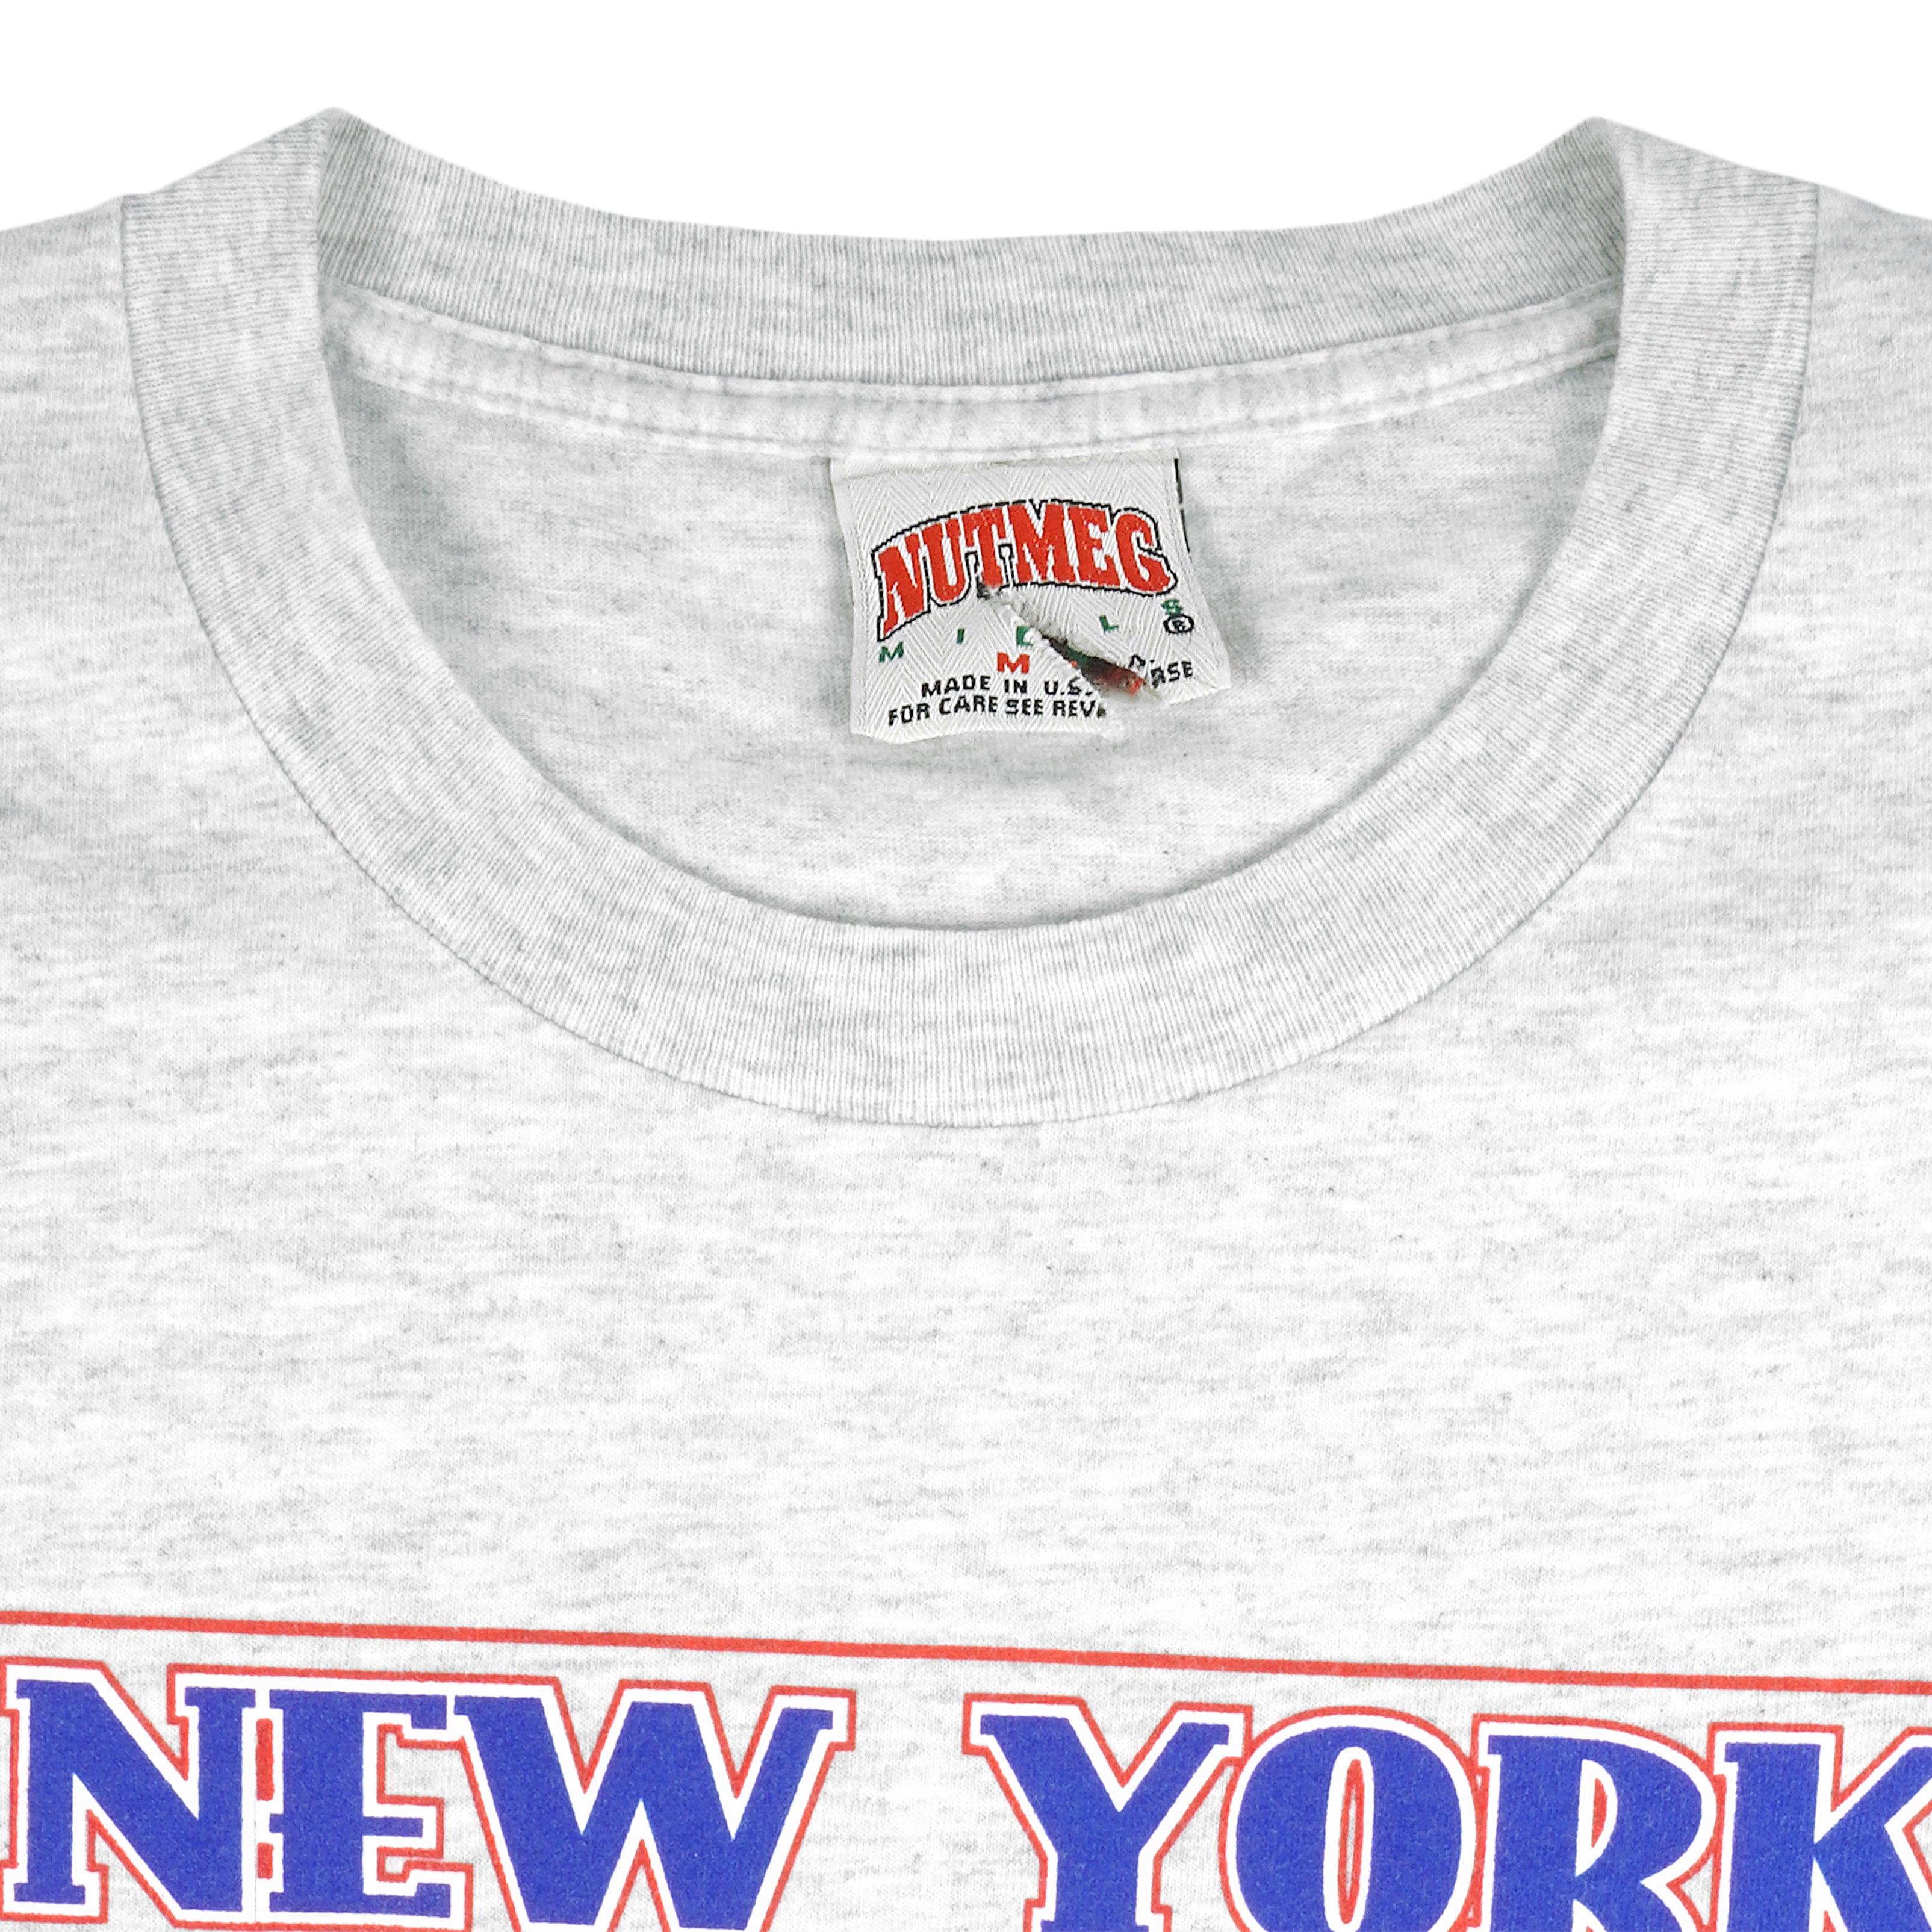 Buy New York City of champions Yankees New york rangers shirt For